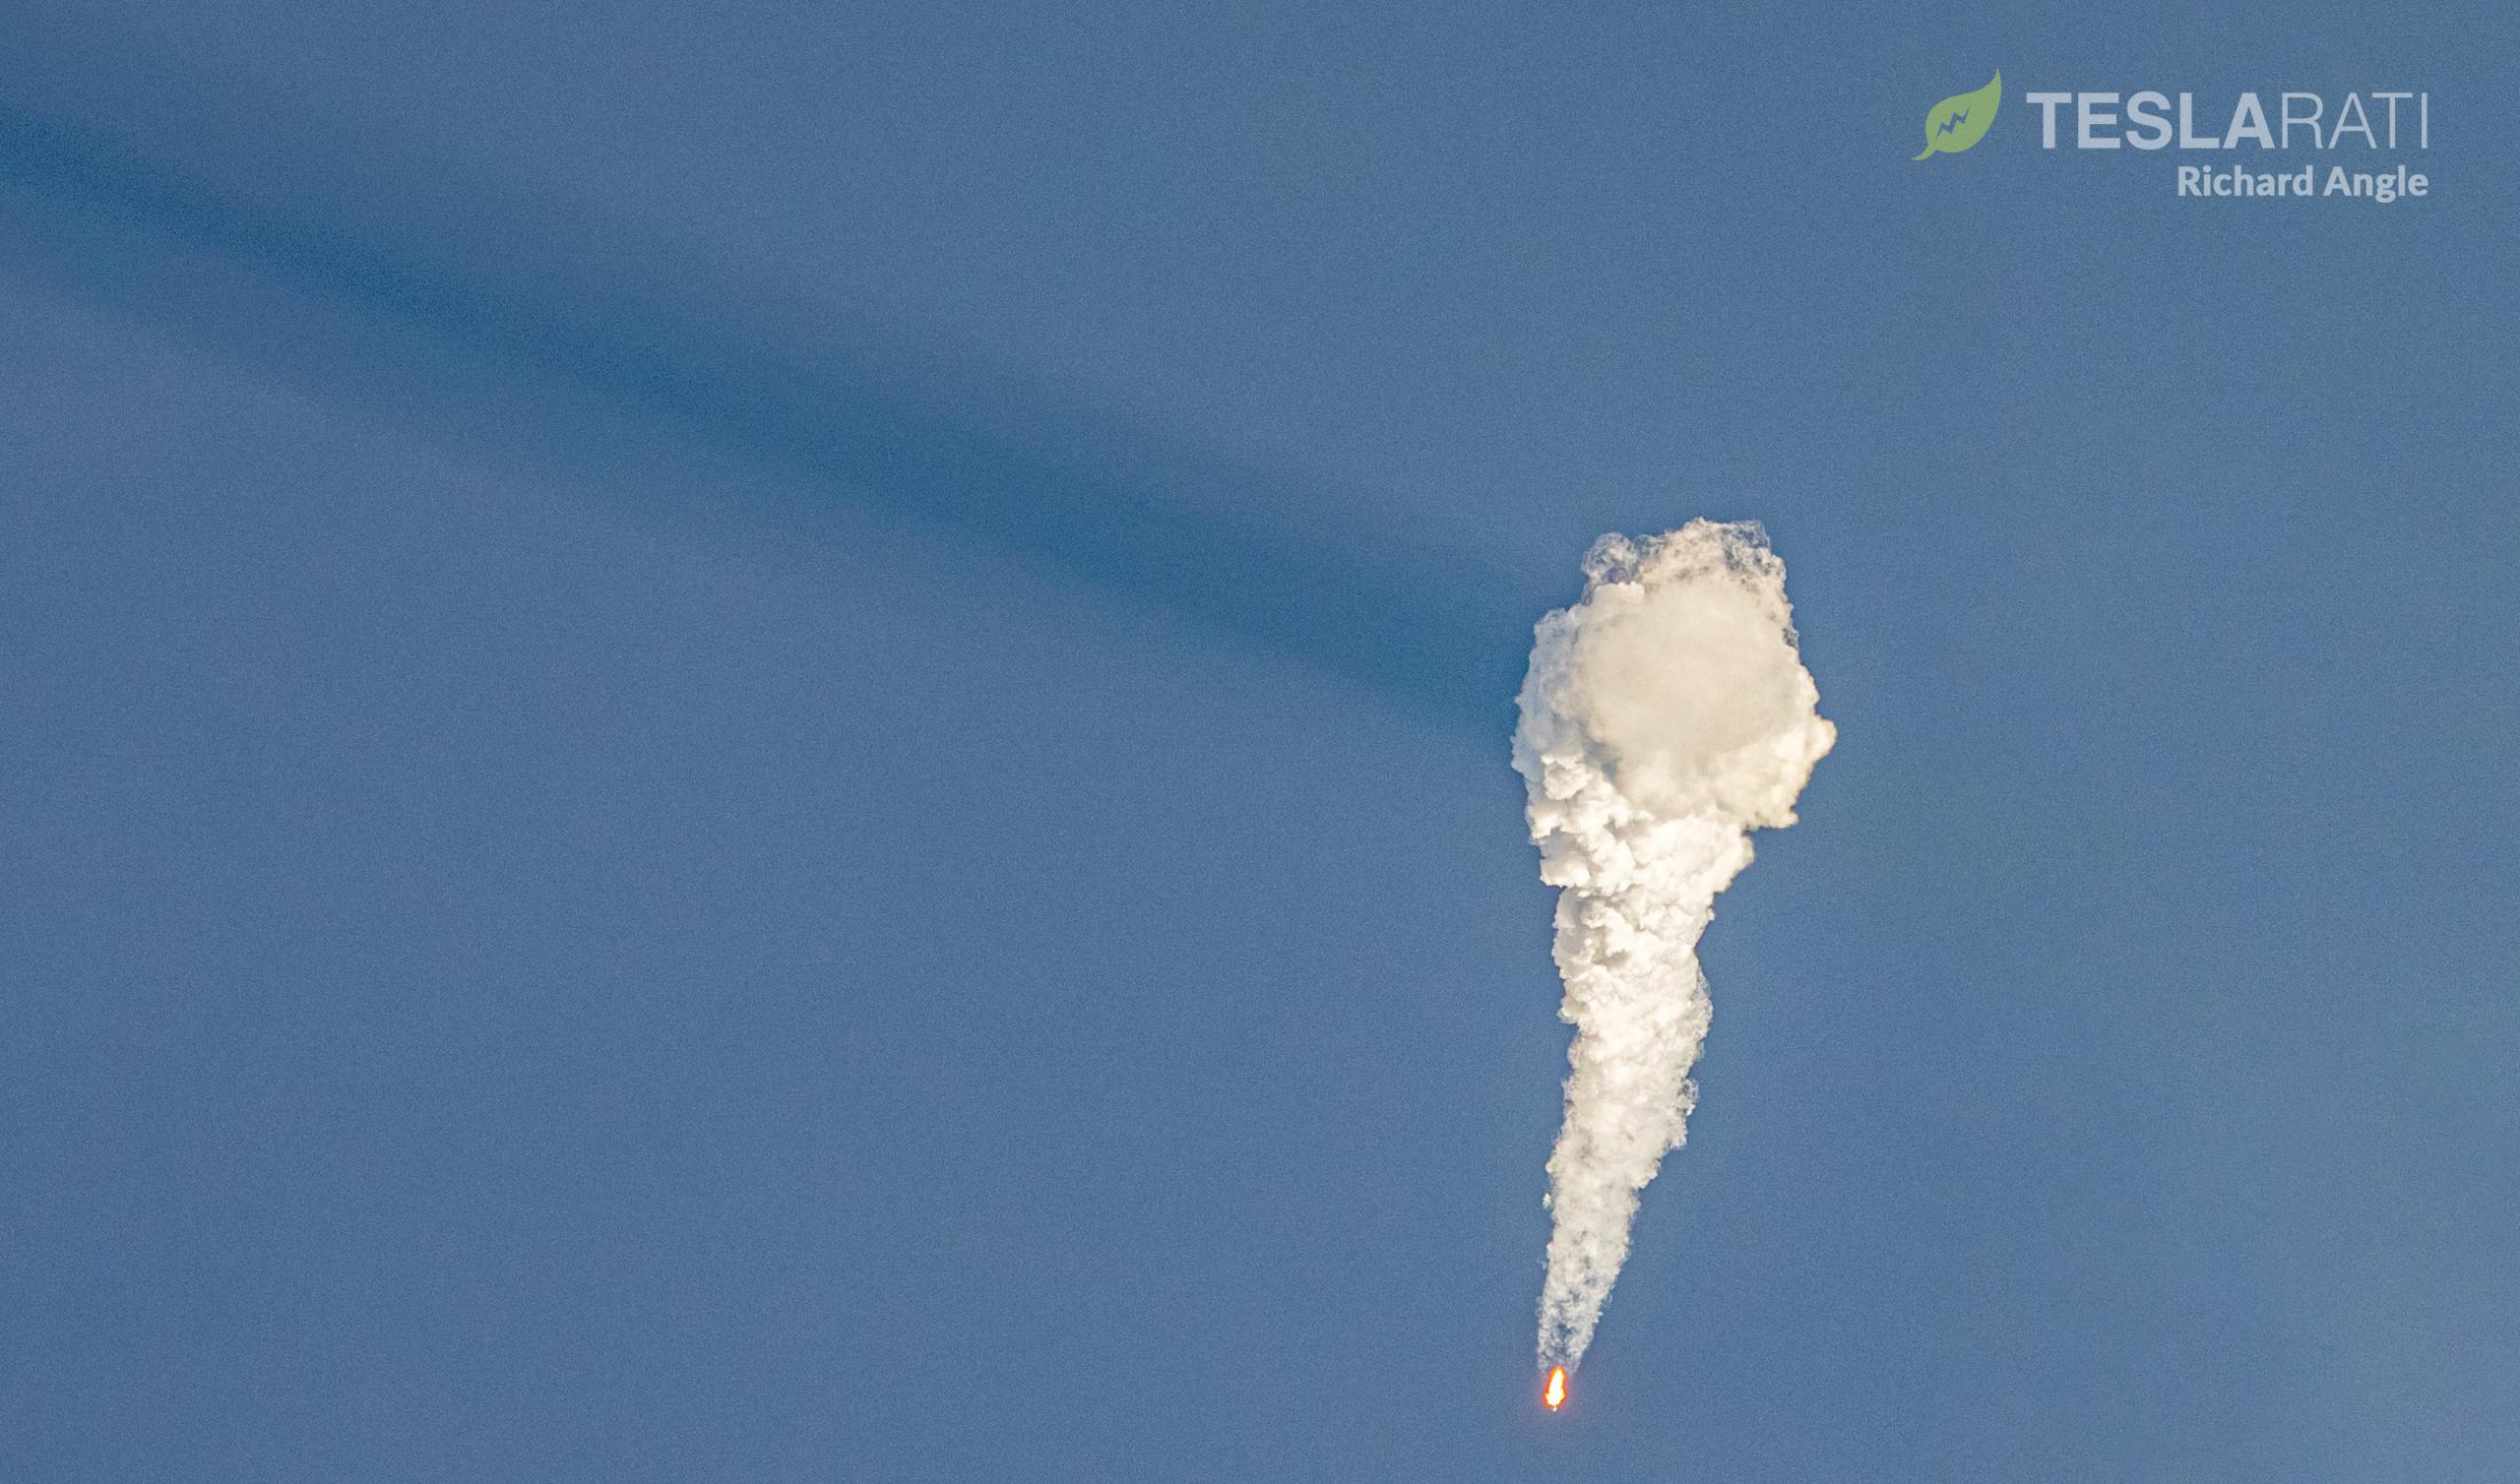 Starlink-11 Falcon 9 B1060 LC-39A 090320 (Richard Angle) launch 3 crop (c)